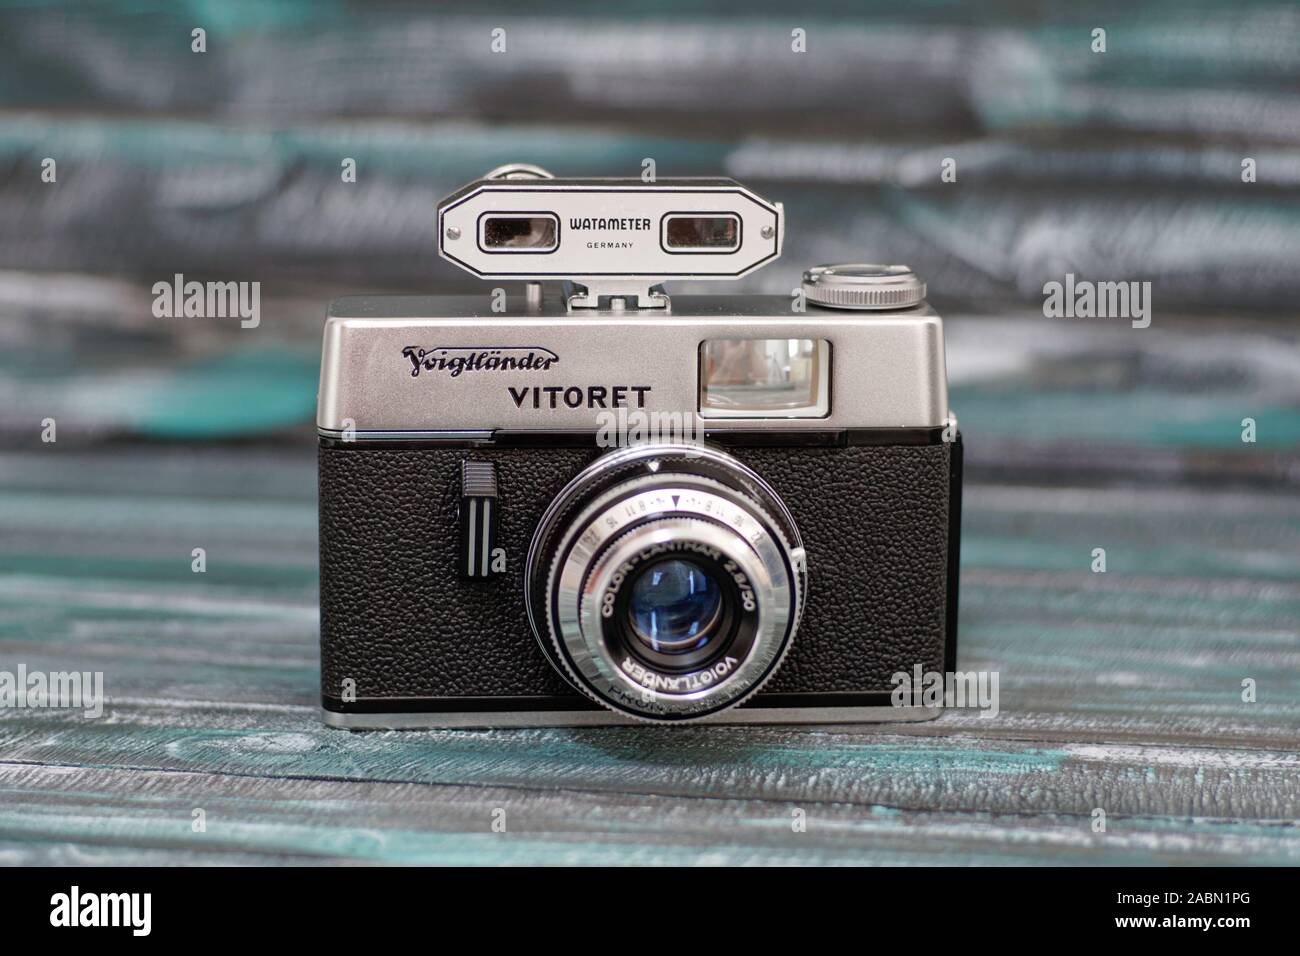 Voigtländer Vitoret 35mm film viewfinder camera Stock Photo